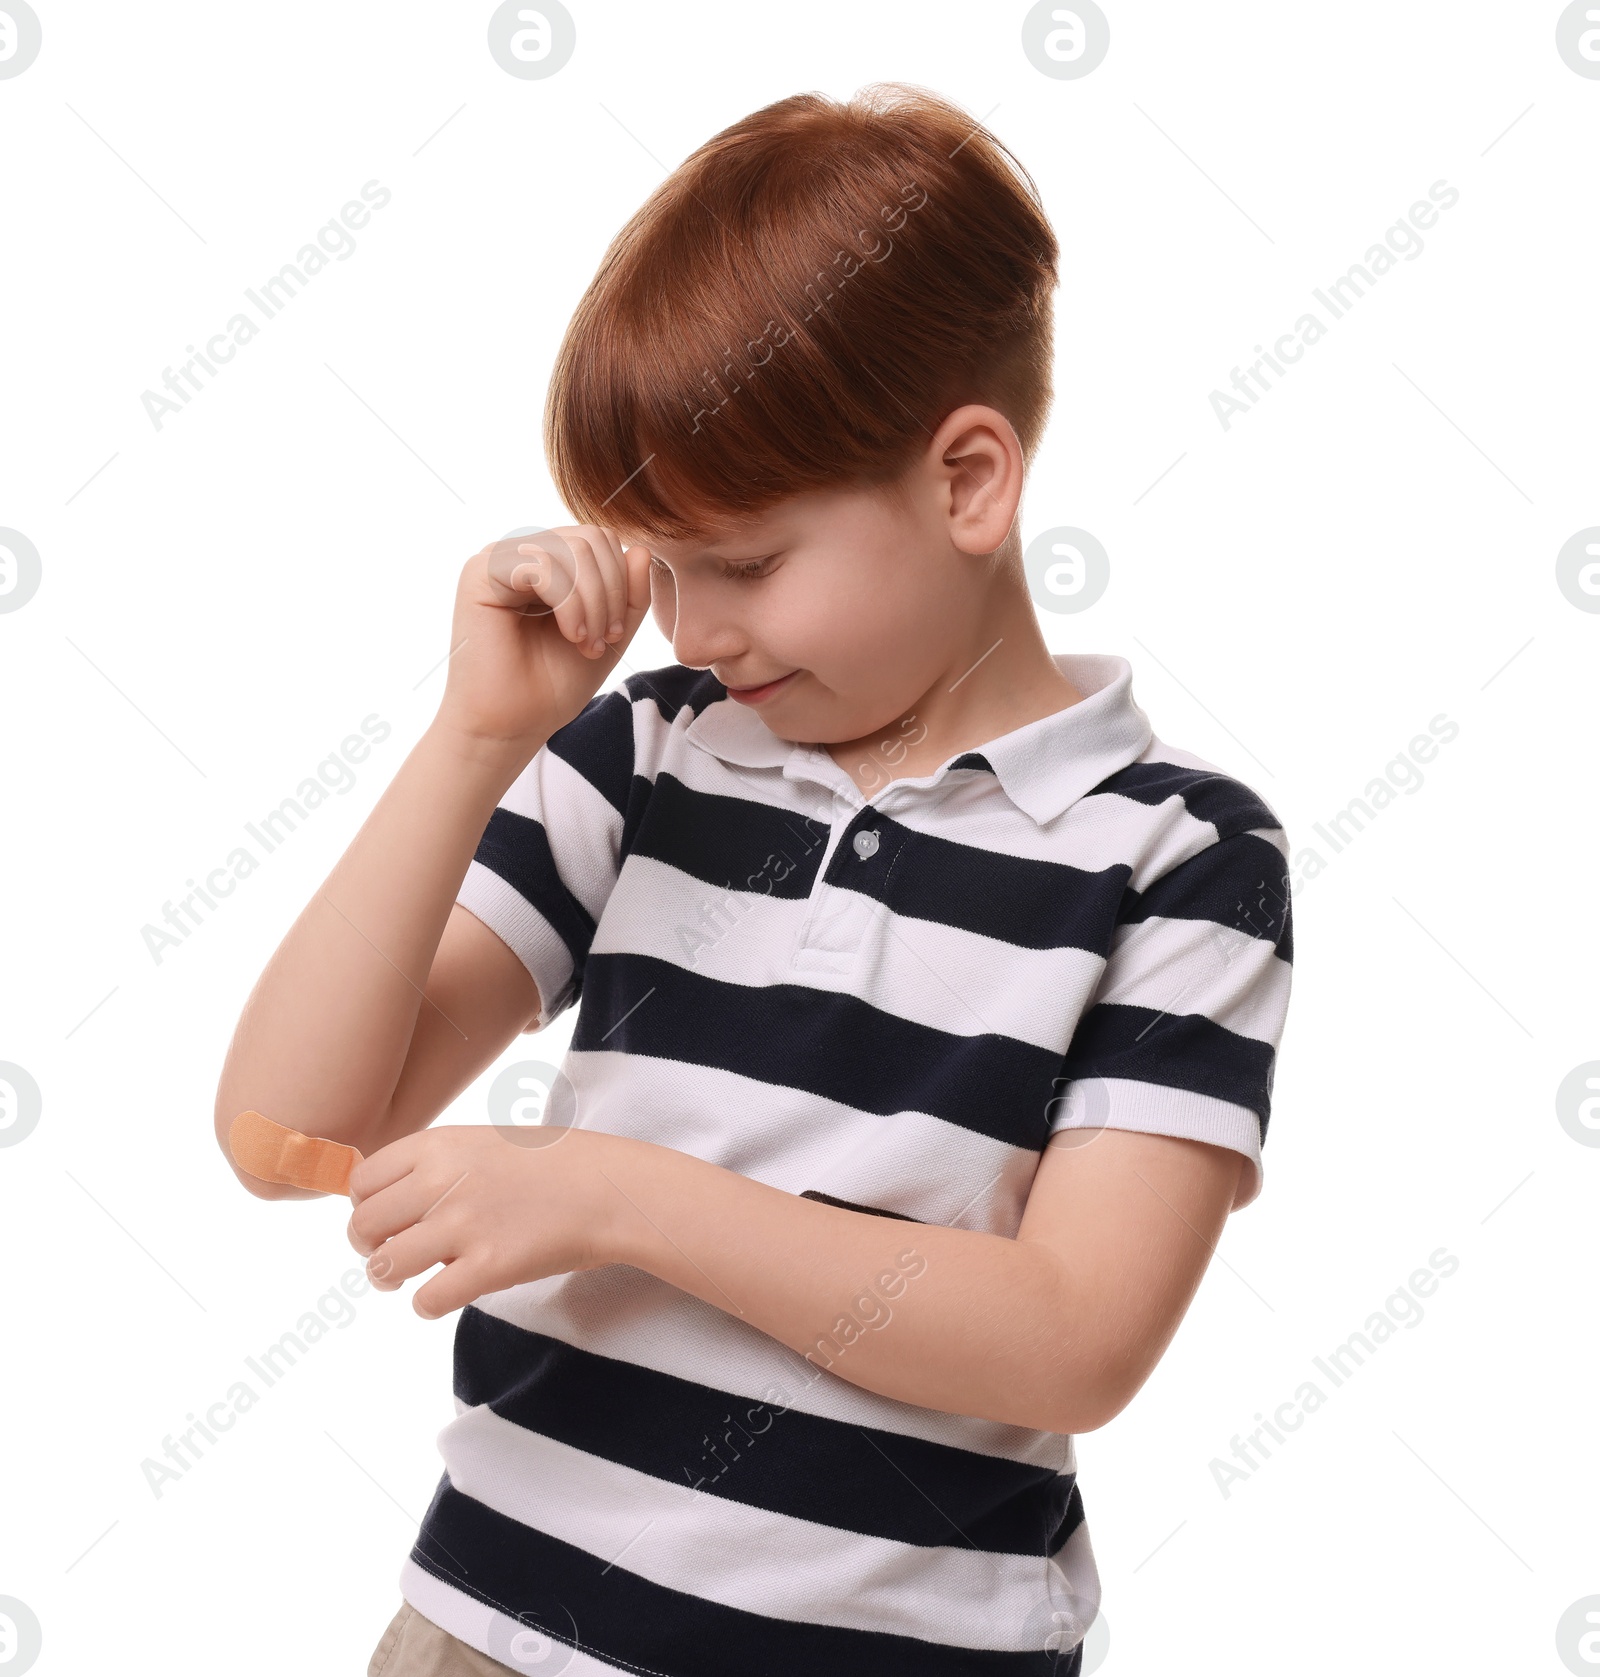 Photo of Little boy putting sticking plaster onto elbow on white background